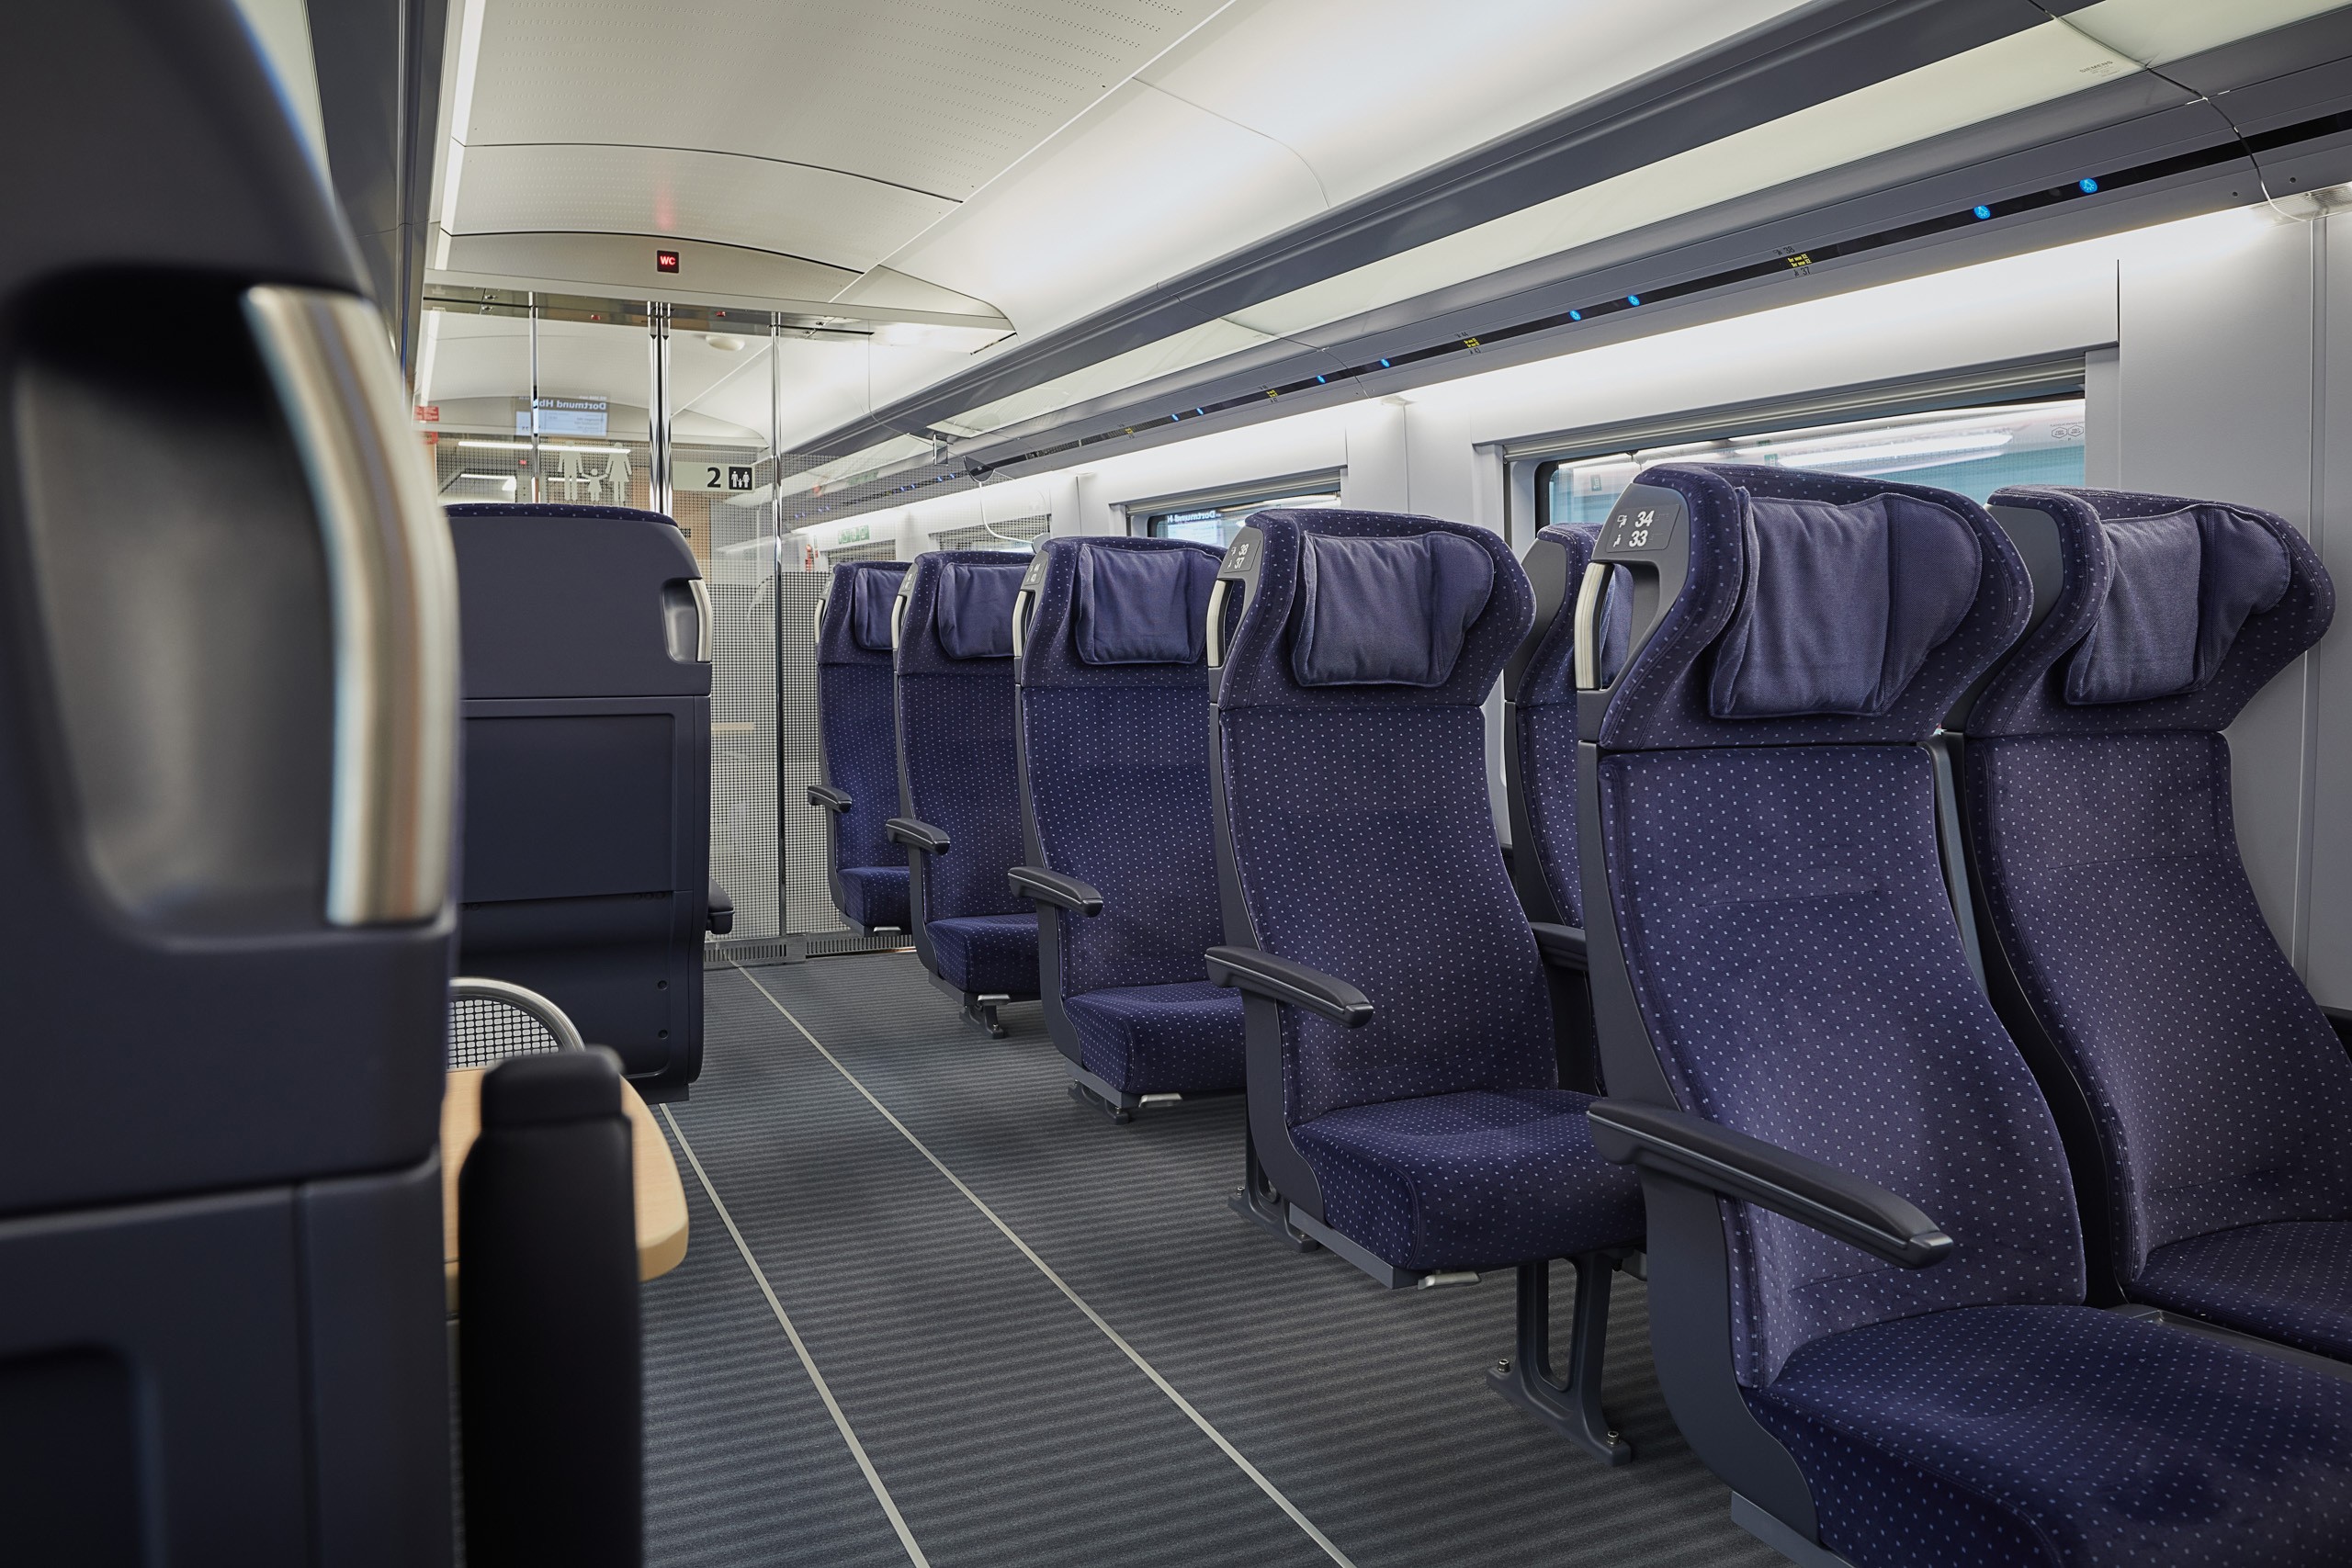 Салон высокоскоростного поезда Velaro MS (ICE 3neo)